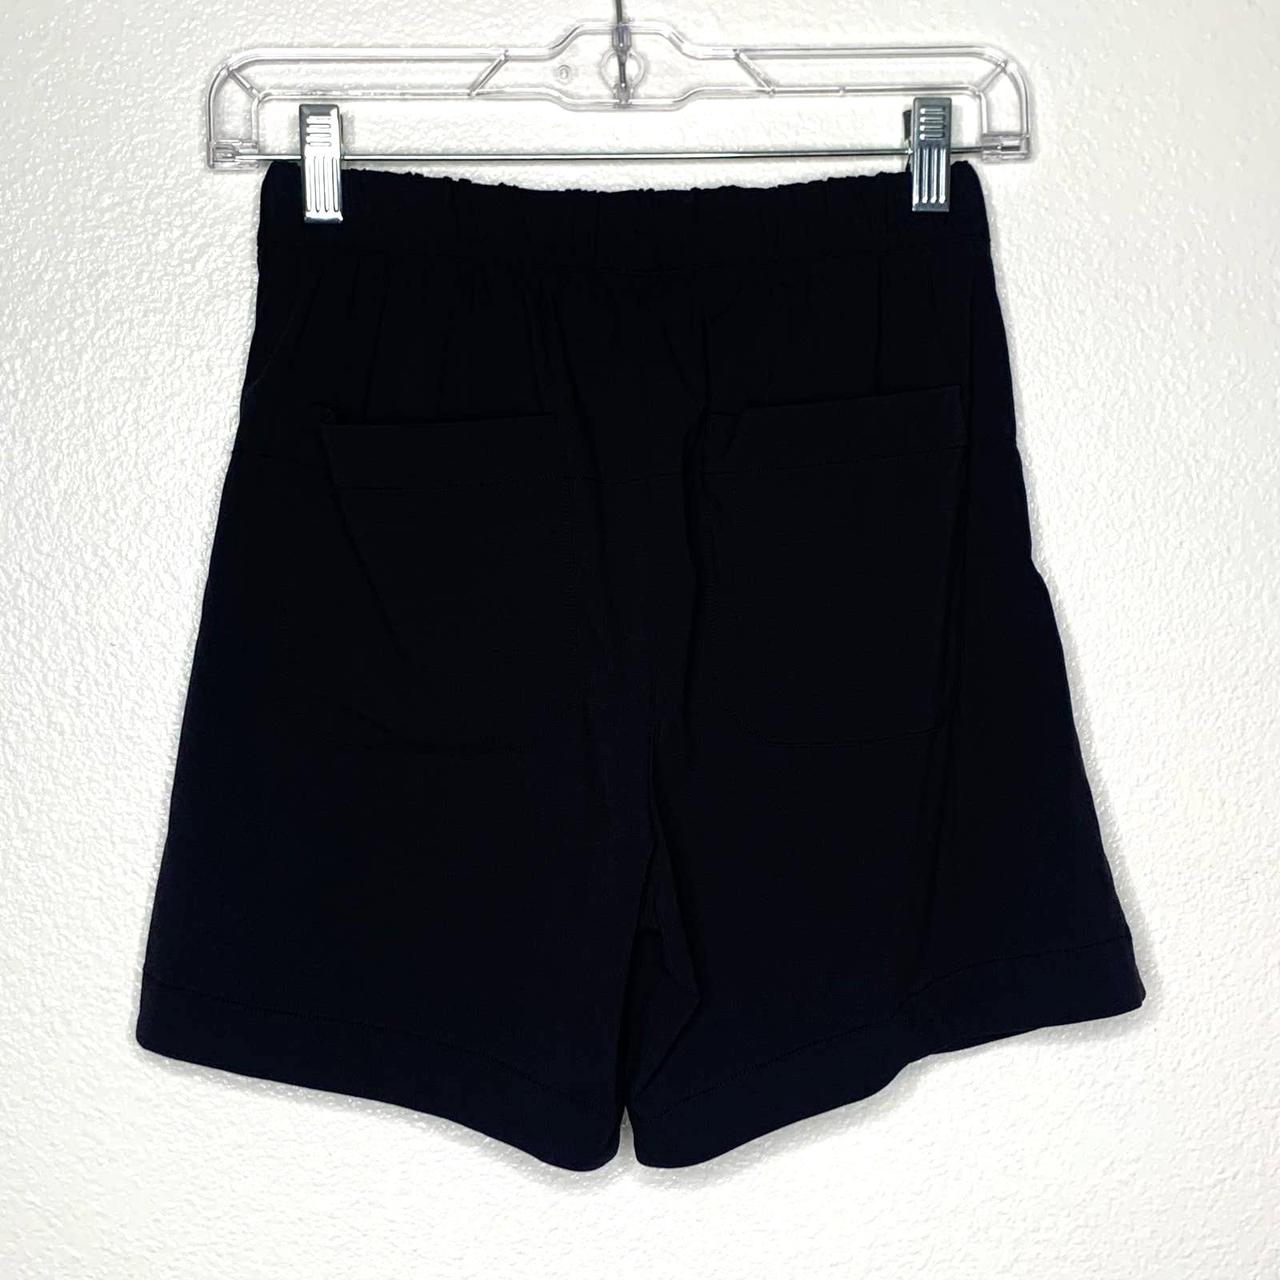 Product Image 3 - LUCY Black Drawstring Athletic Shorts